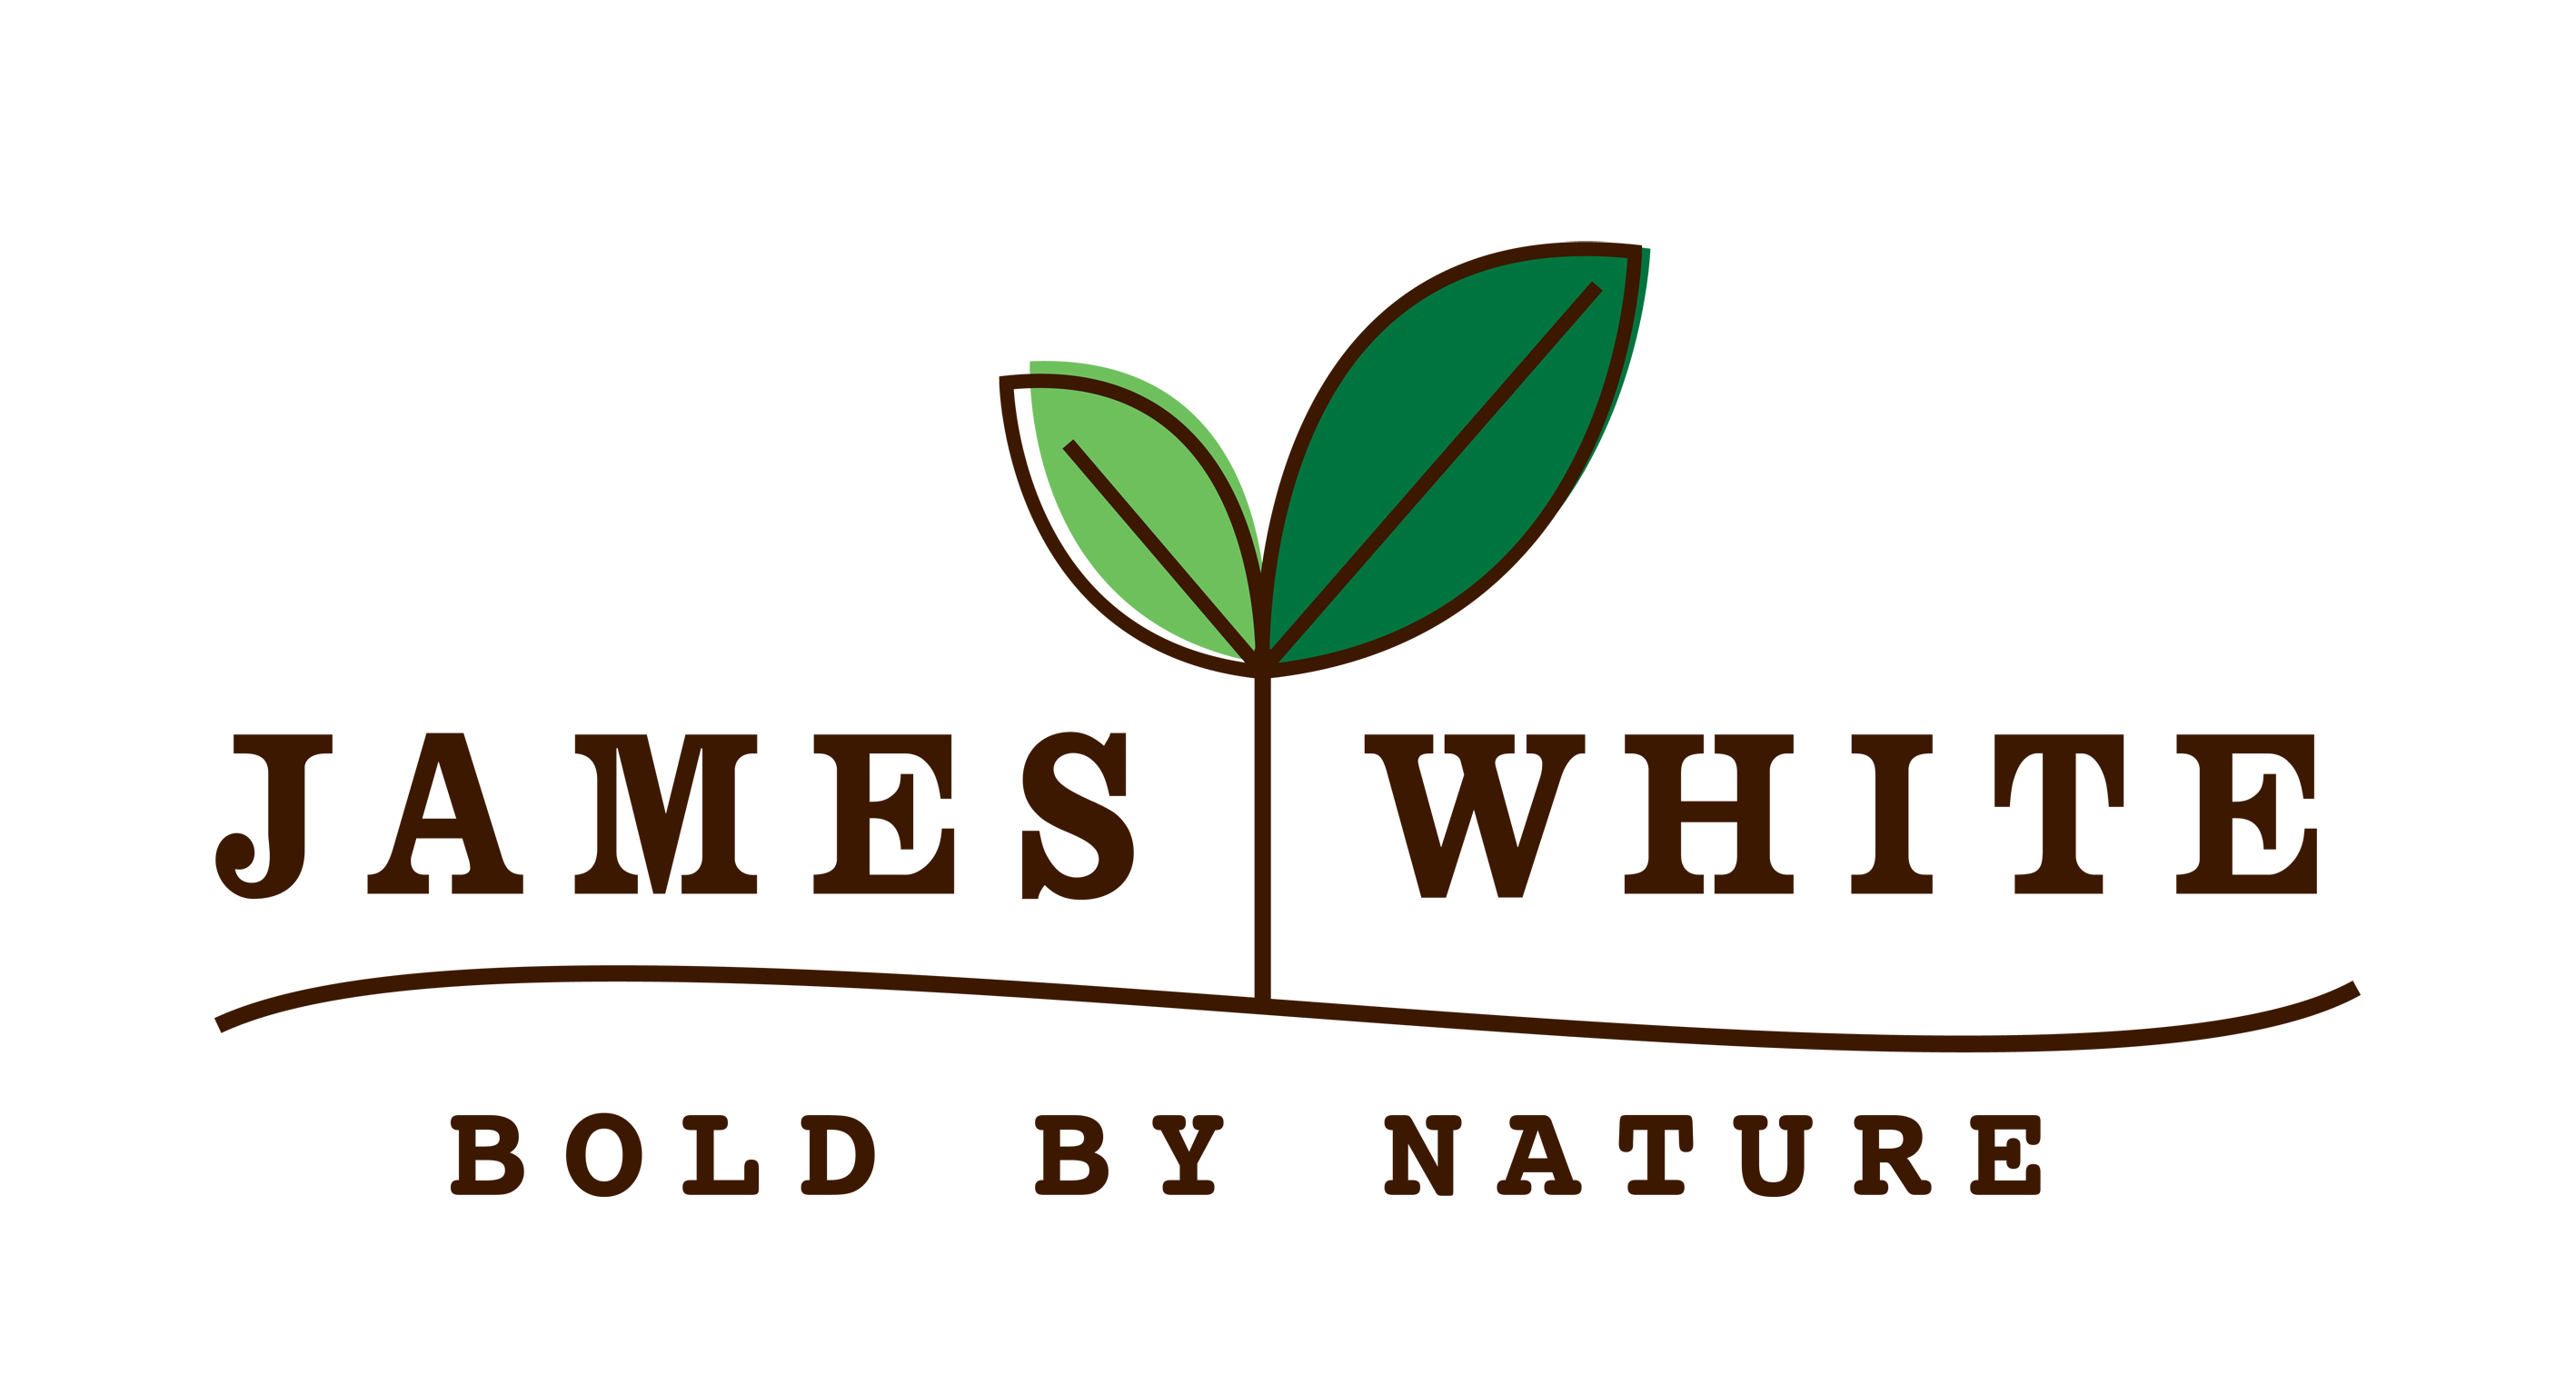 James White Drinks